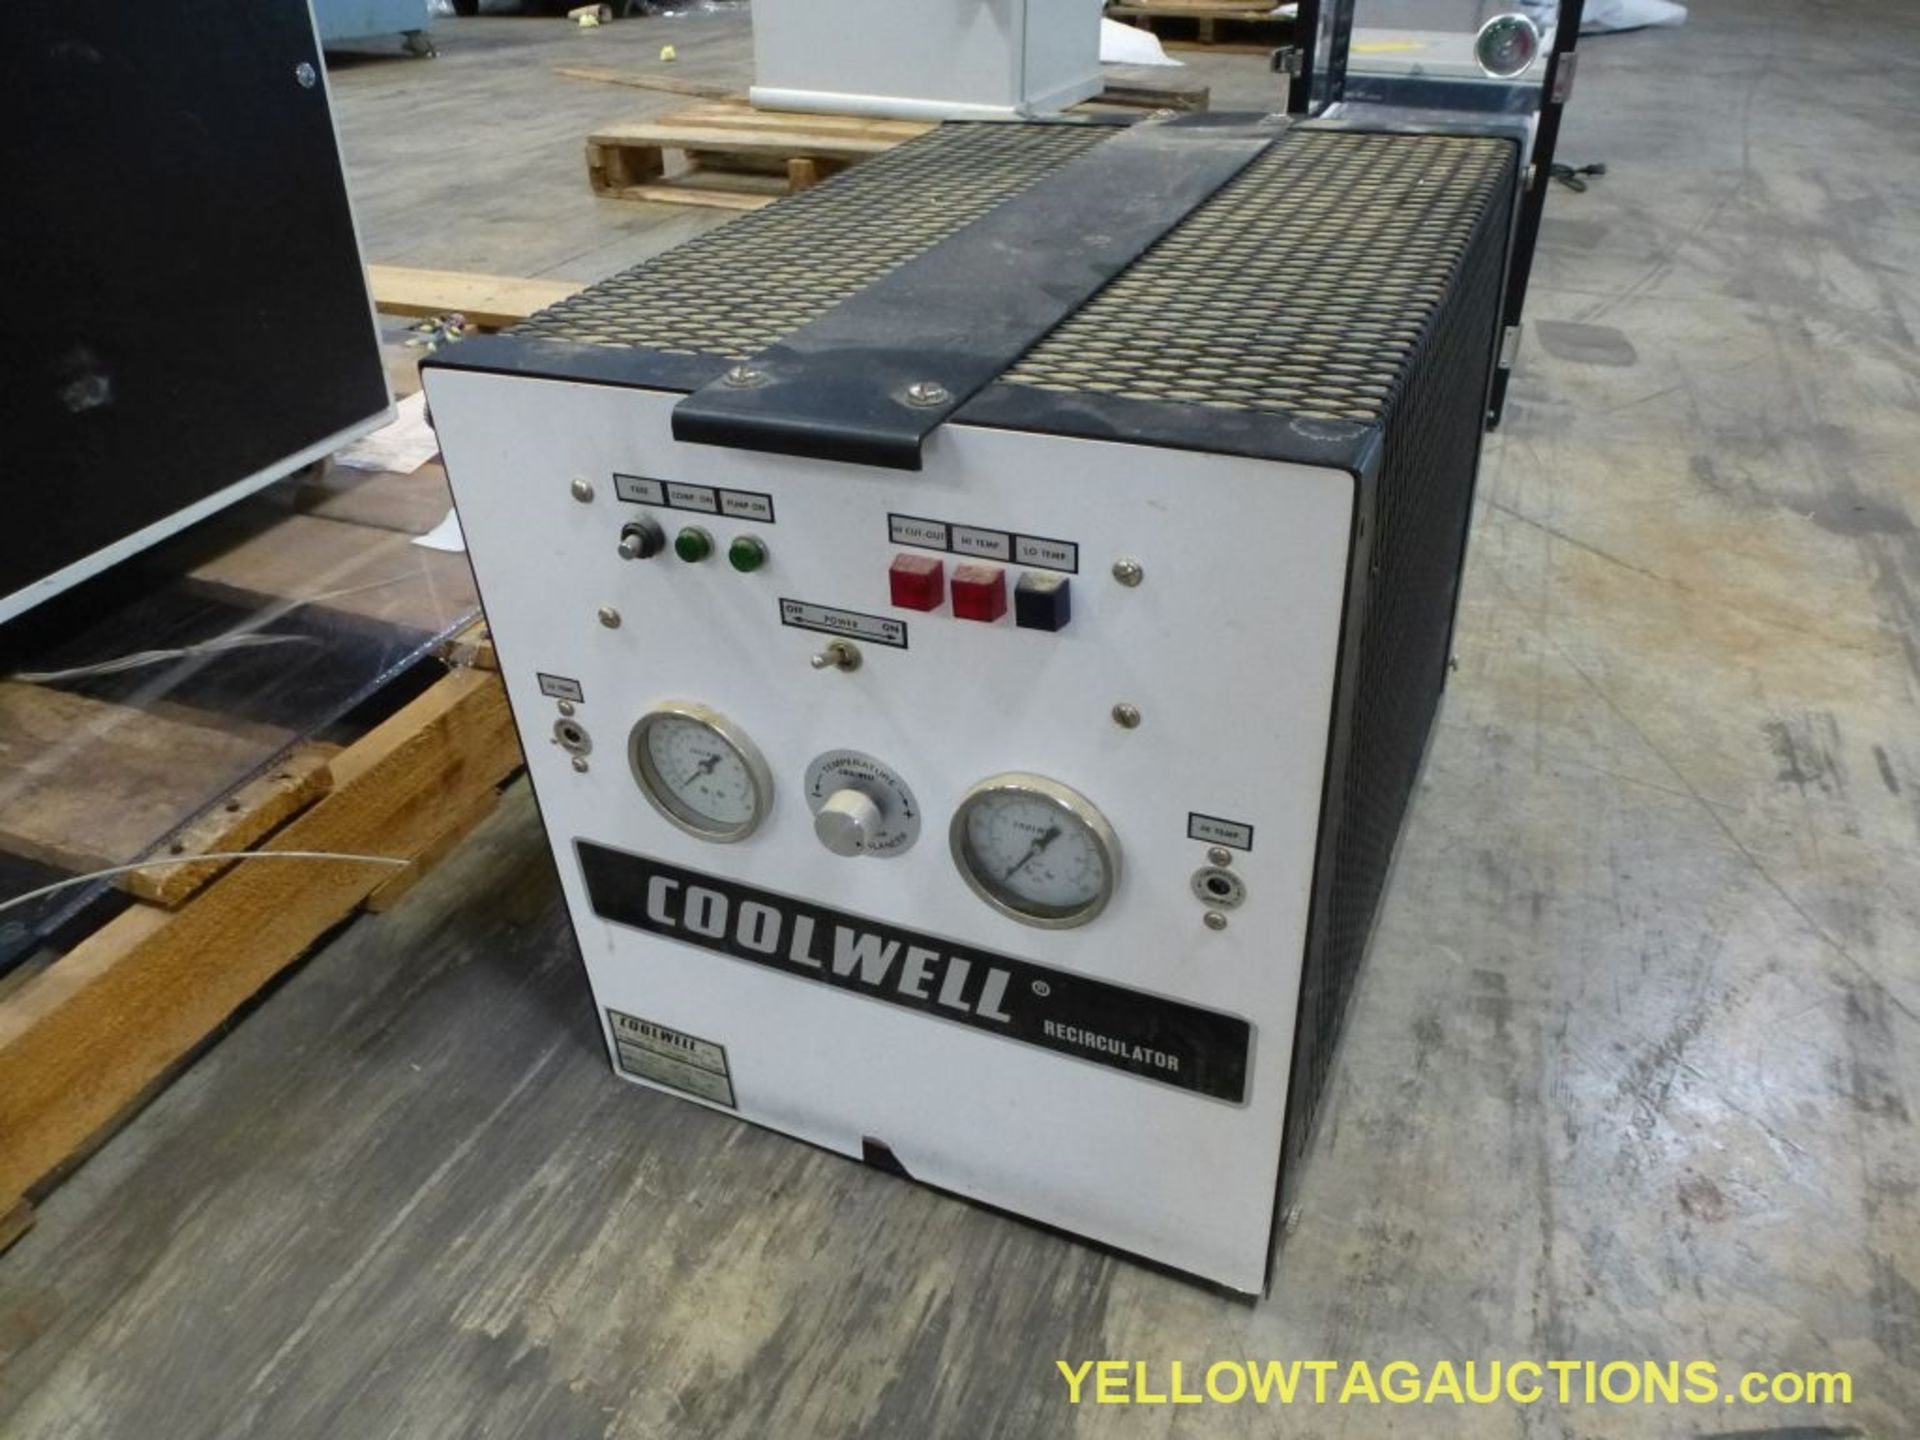 Cool Well Recirculator|Model No. MS-033WLocation: YTA Warehouse